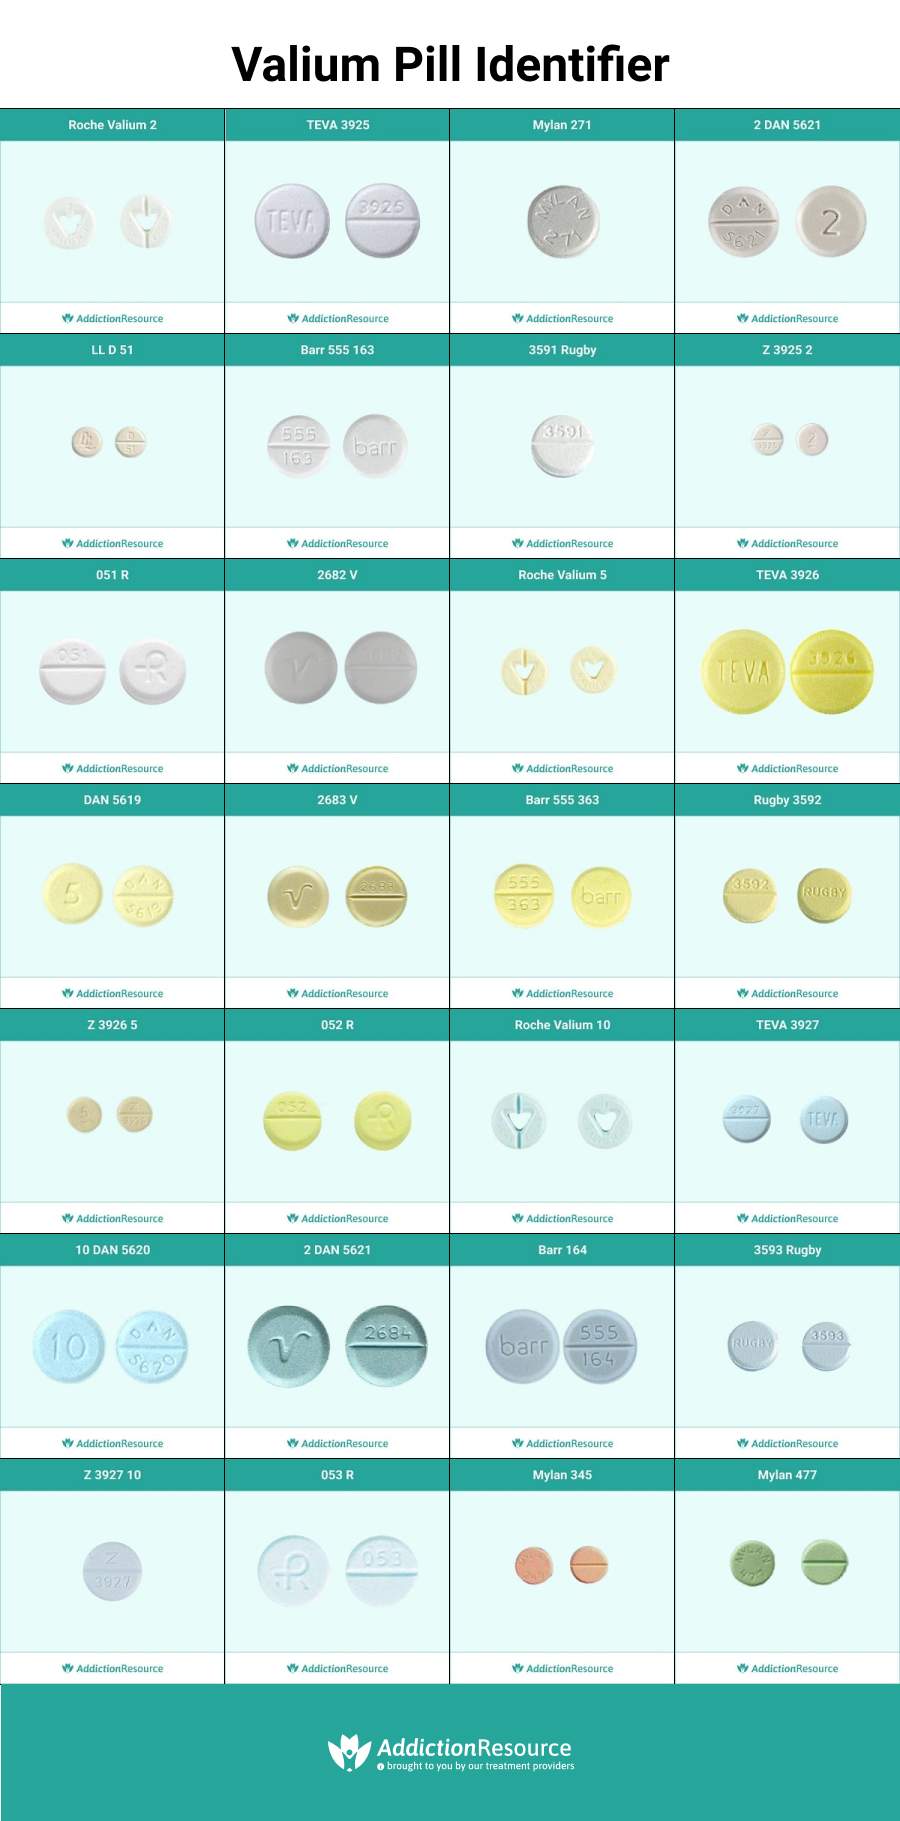 Valium pill identifier